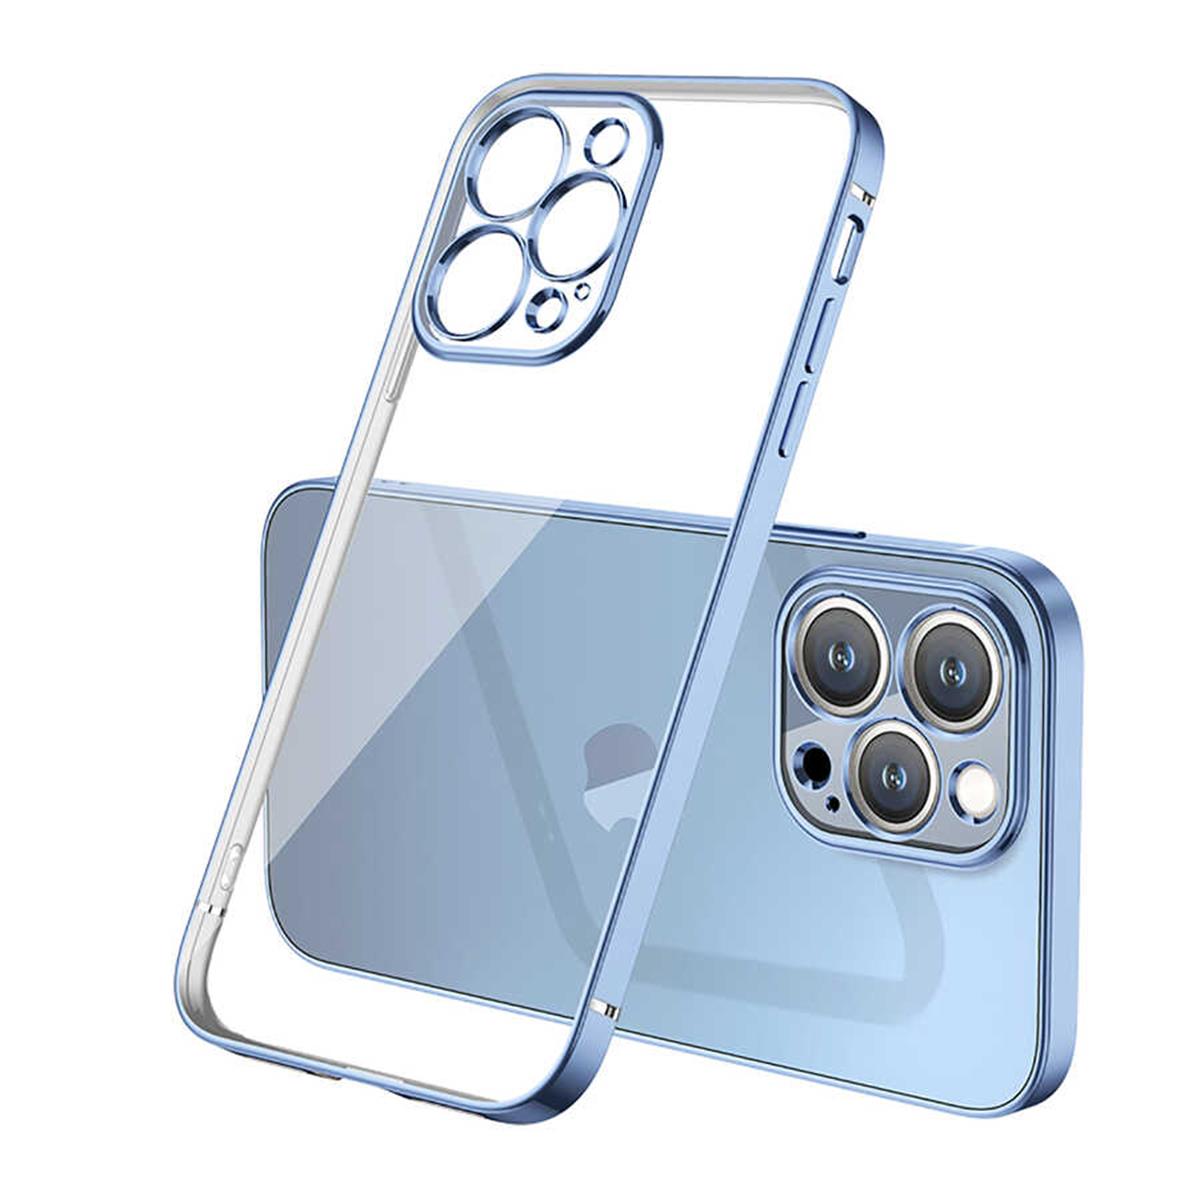 iPhone 13 Pro Max Şeffaf Kılıf Orjinal Kılıf Modelleri | dubaiaksesuar.com